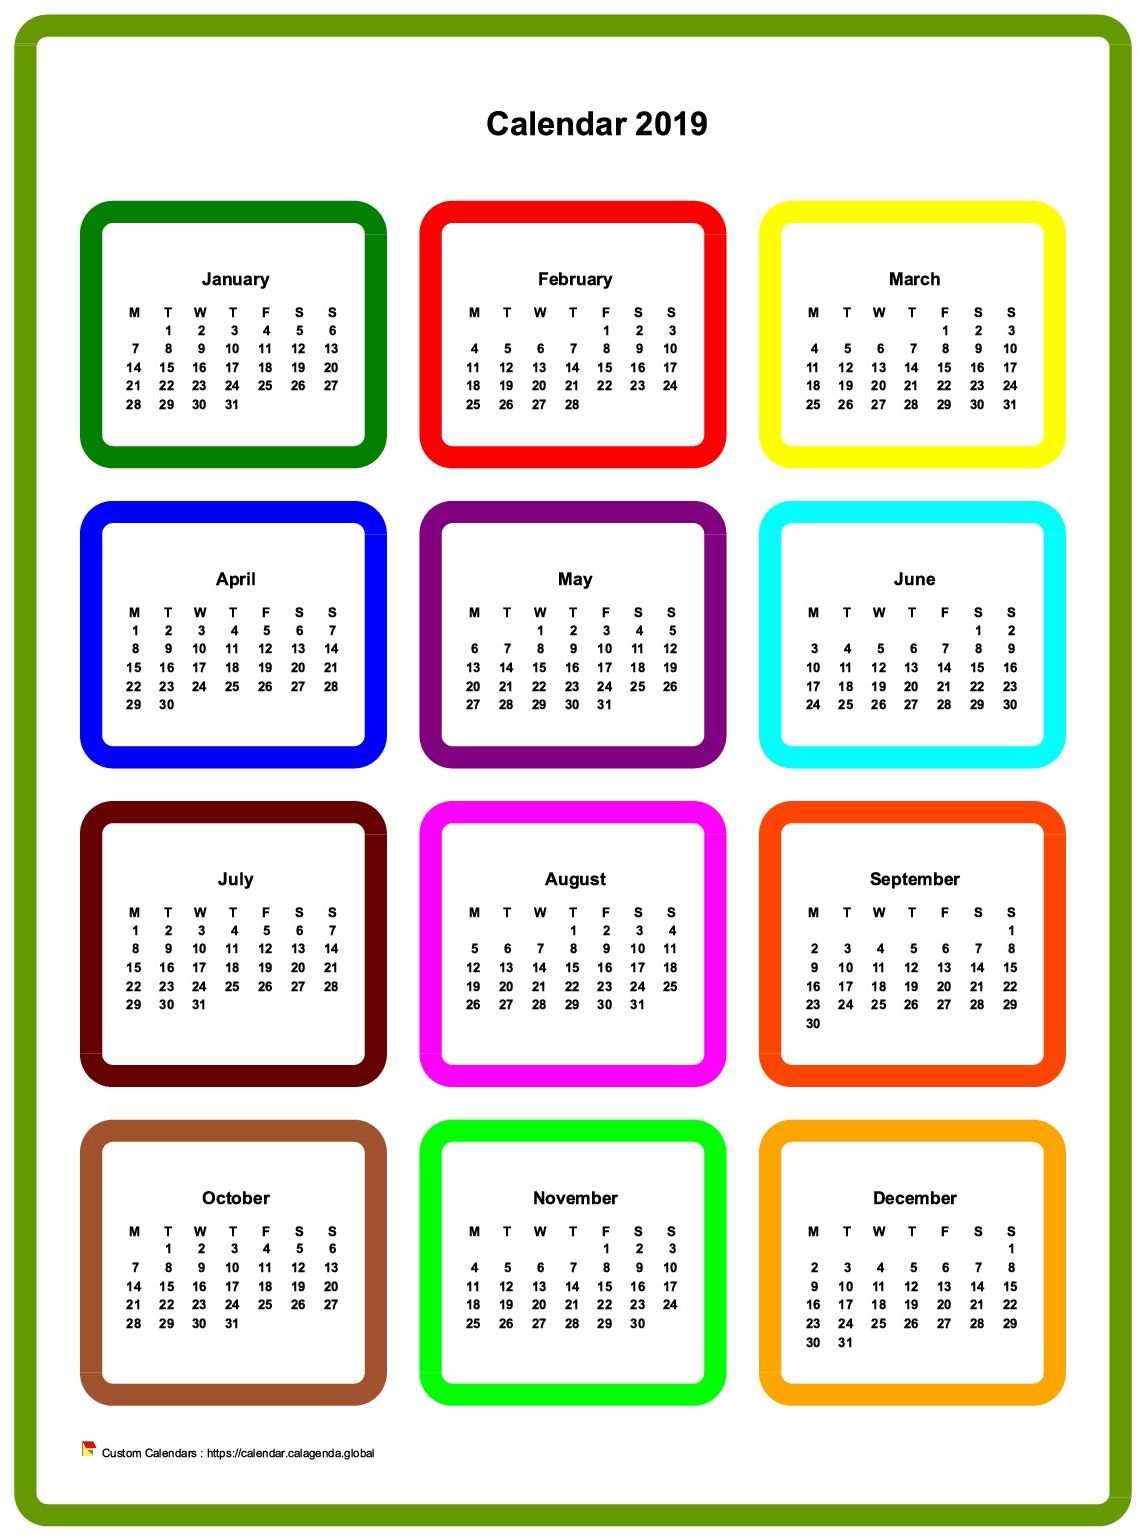 Calendar 2019 annual colored